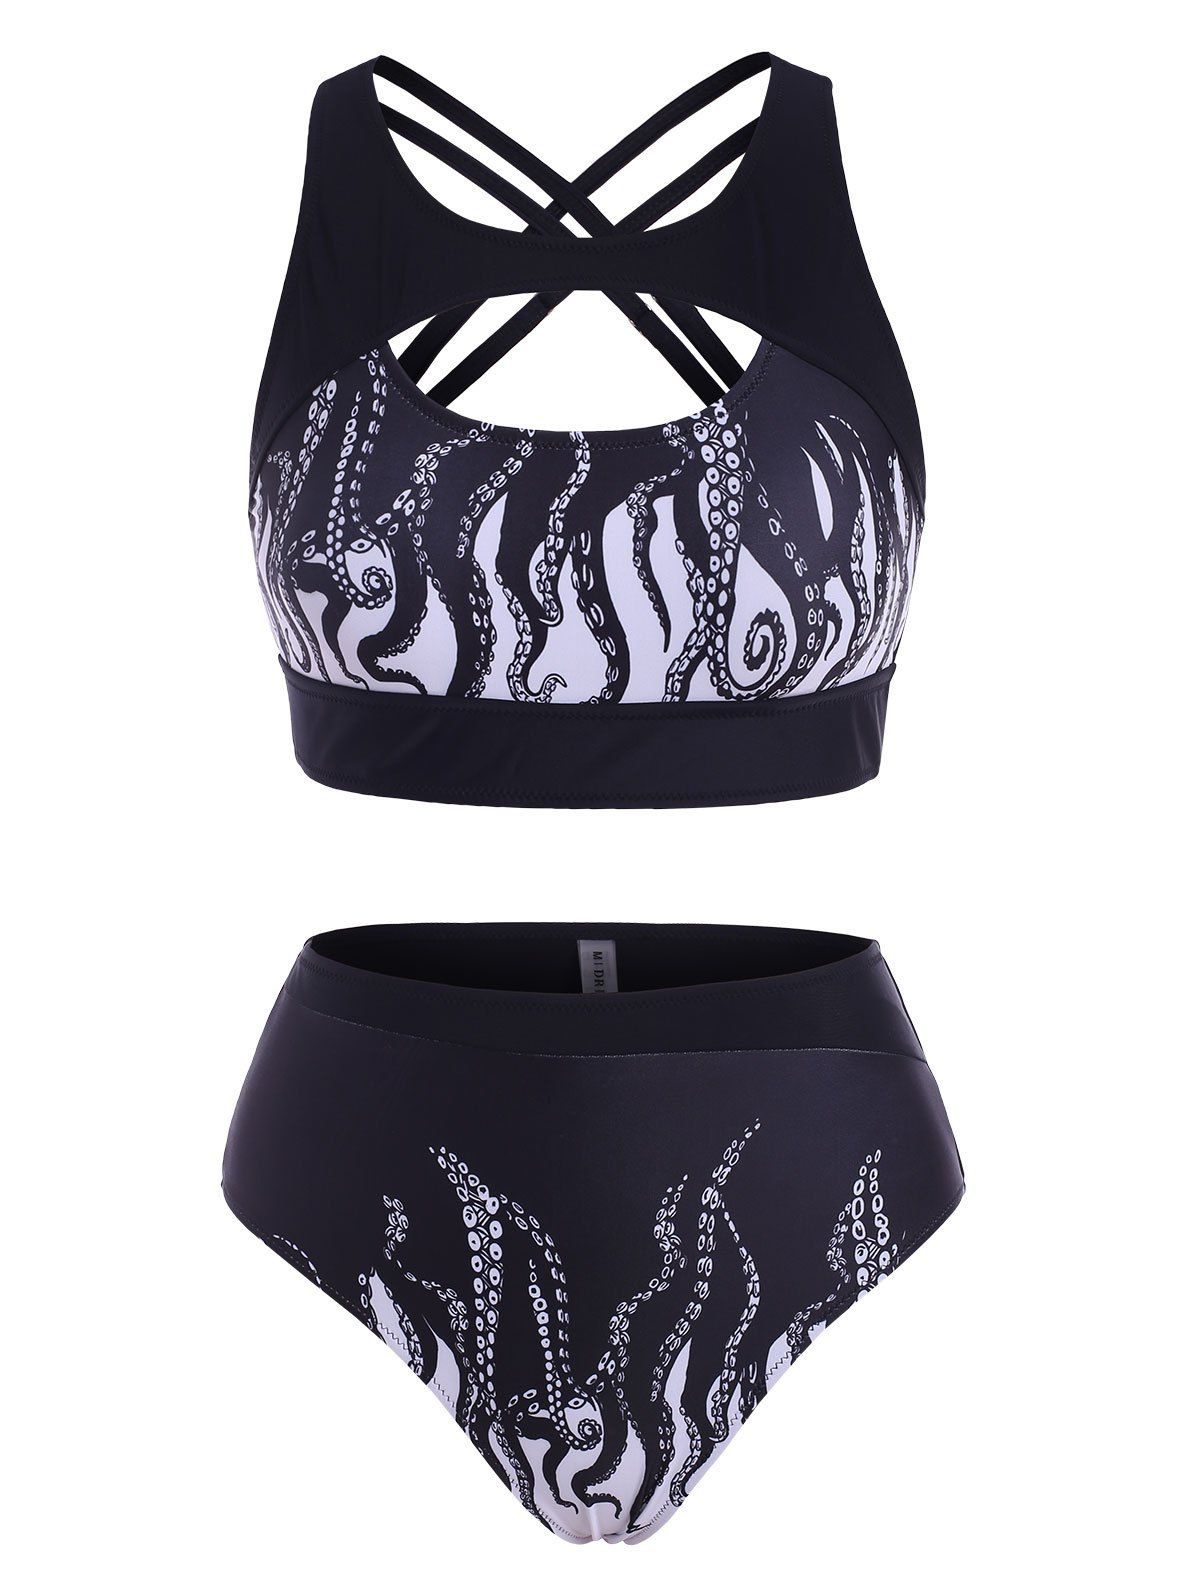 Beach Cutout Swimsuit Criss Cross Octopus Print Tankini Swimwear - BLACK XXL